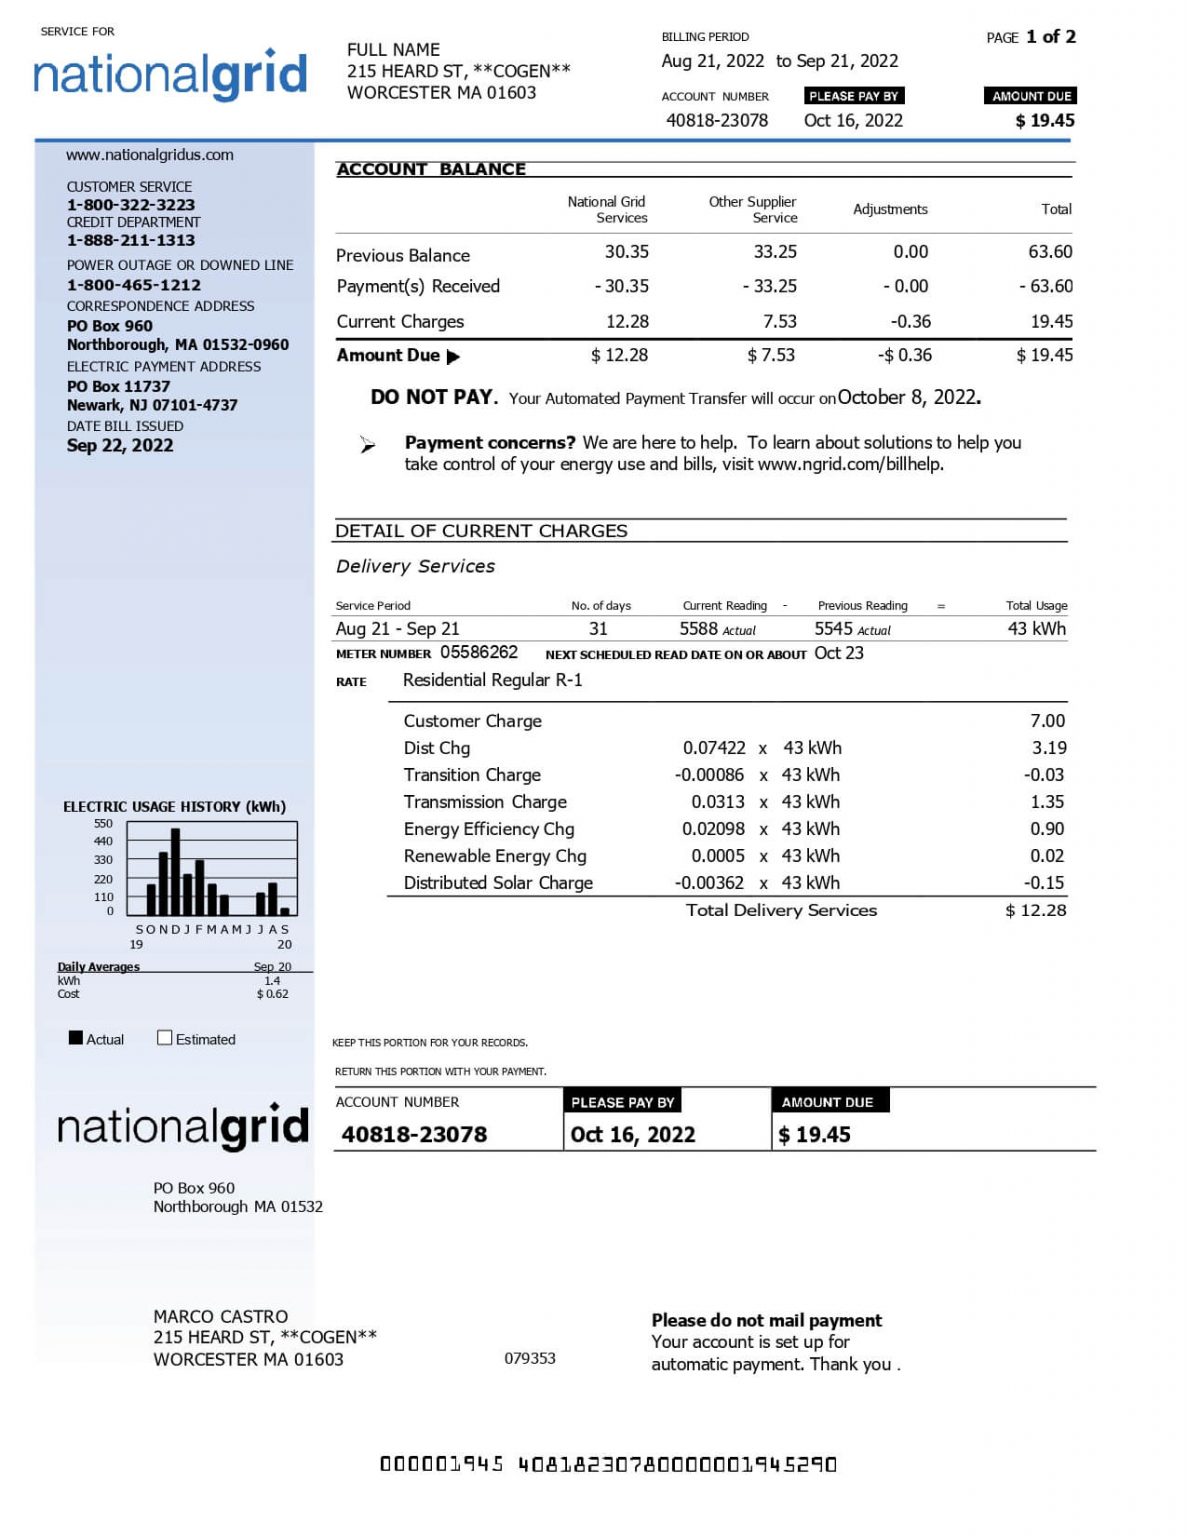 new-2023-national-grid-bill-template-mbcvirtual